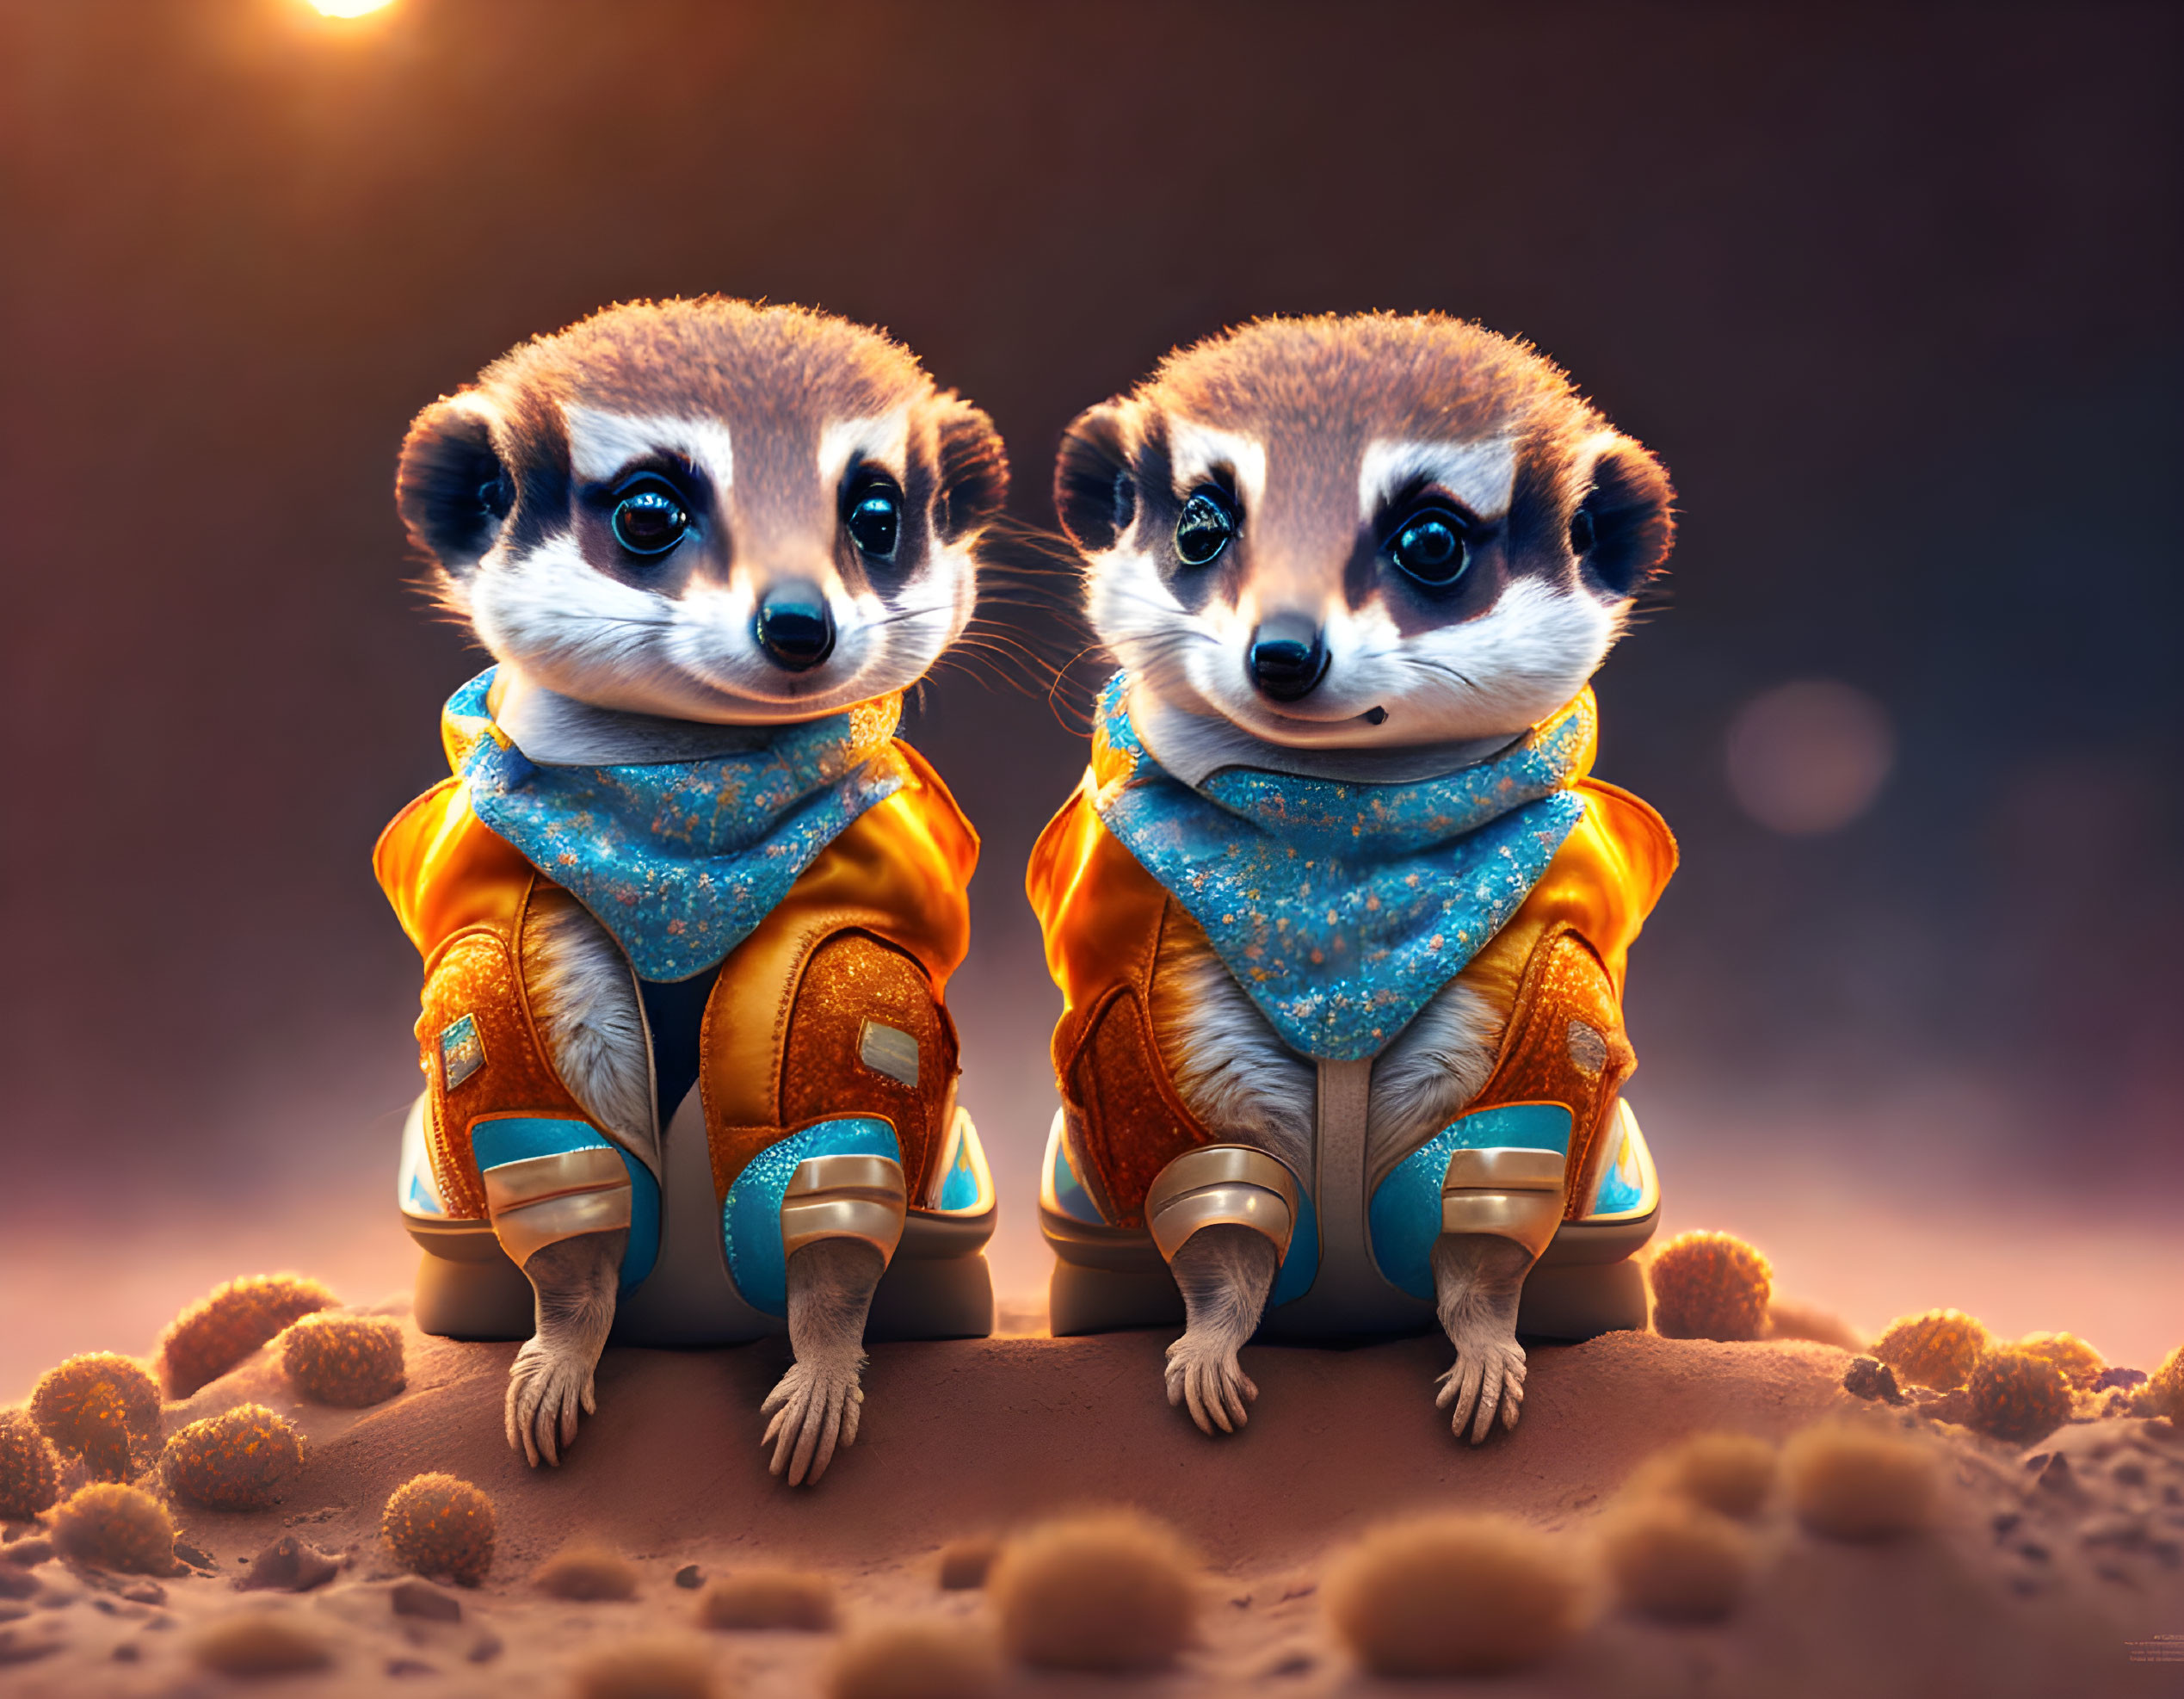 Two little meerkats